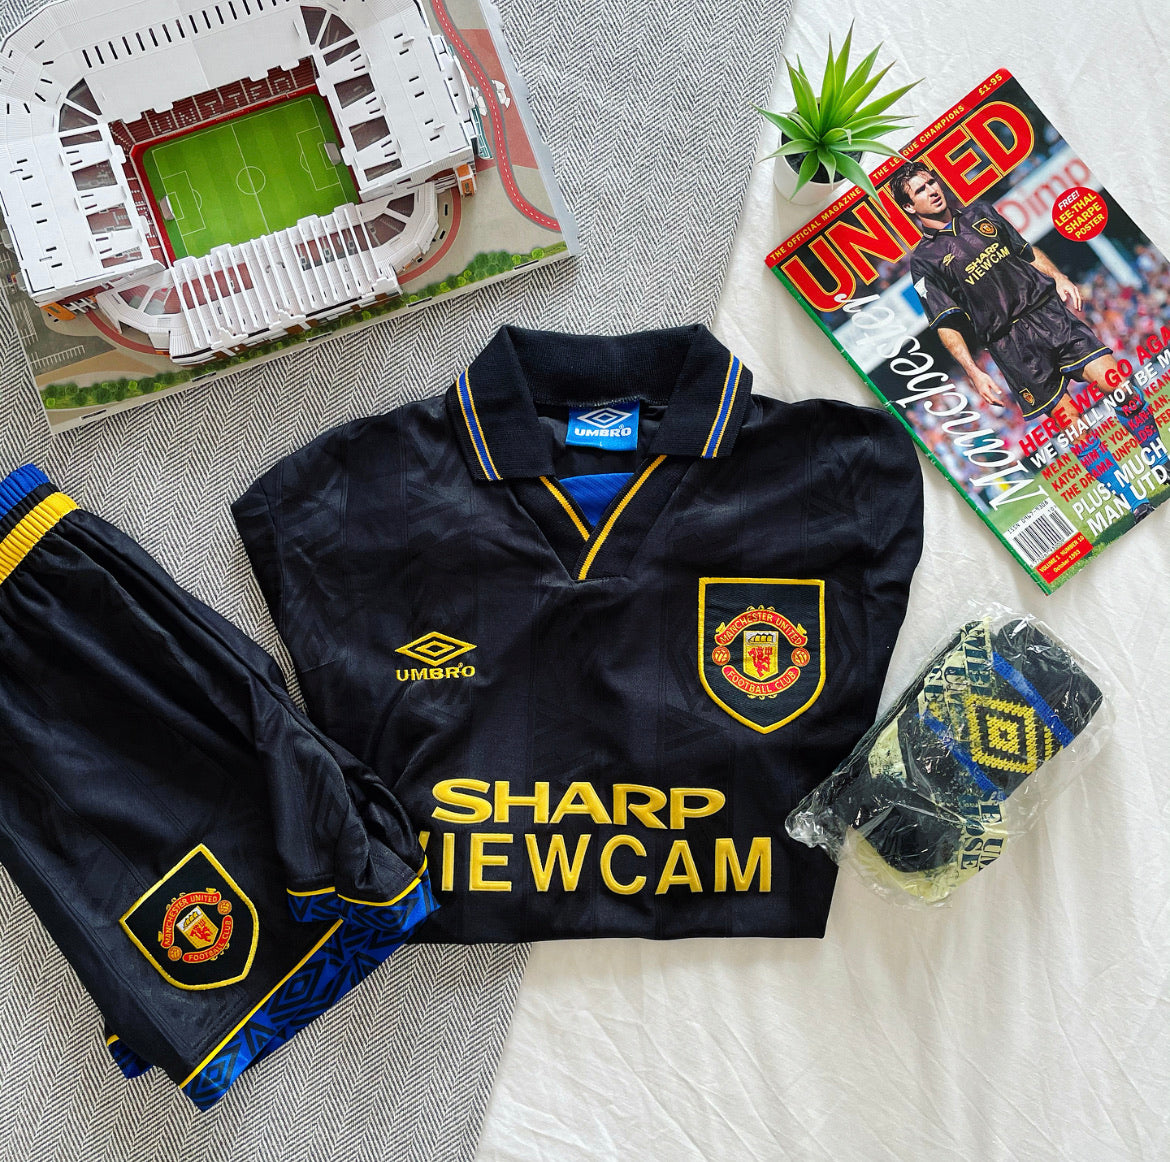 1993-95 Manchester United Away Full Kit | Giggs #11 | Mint | L